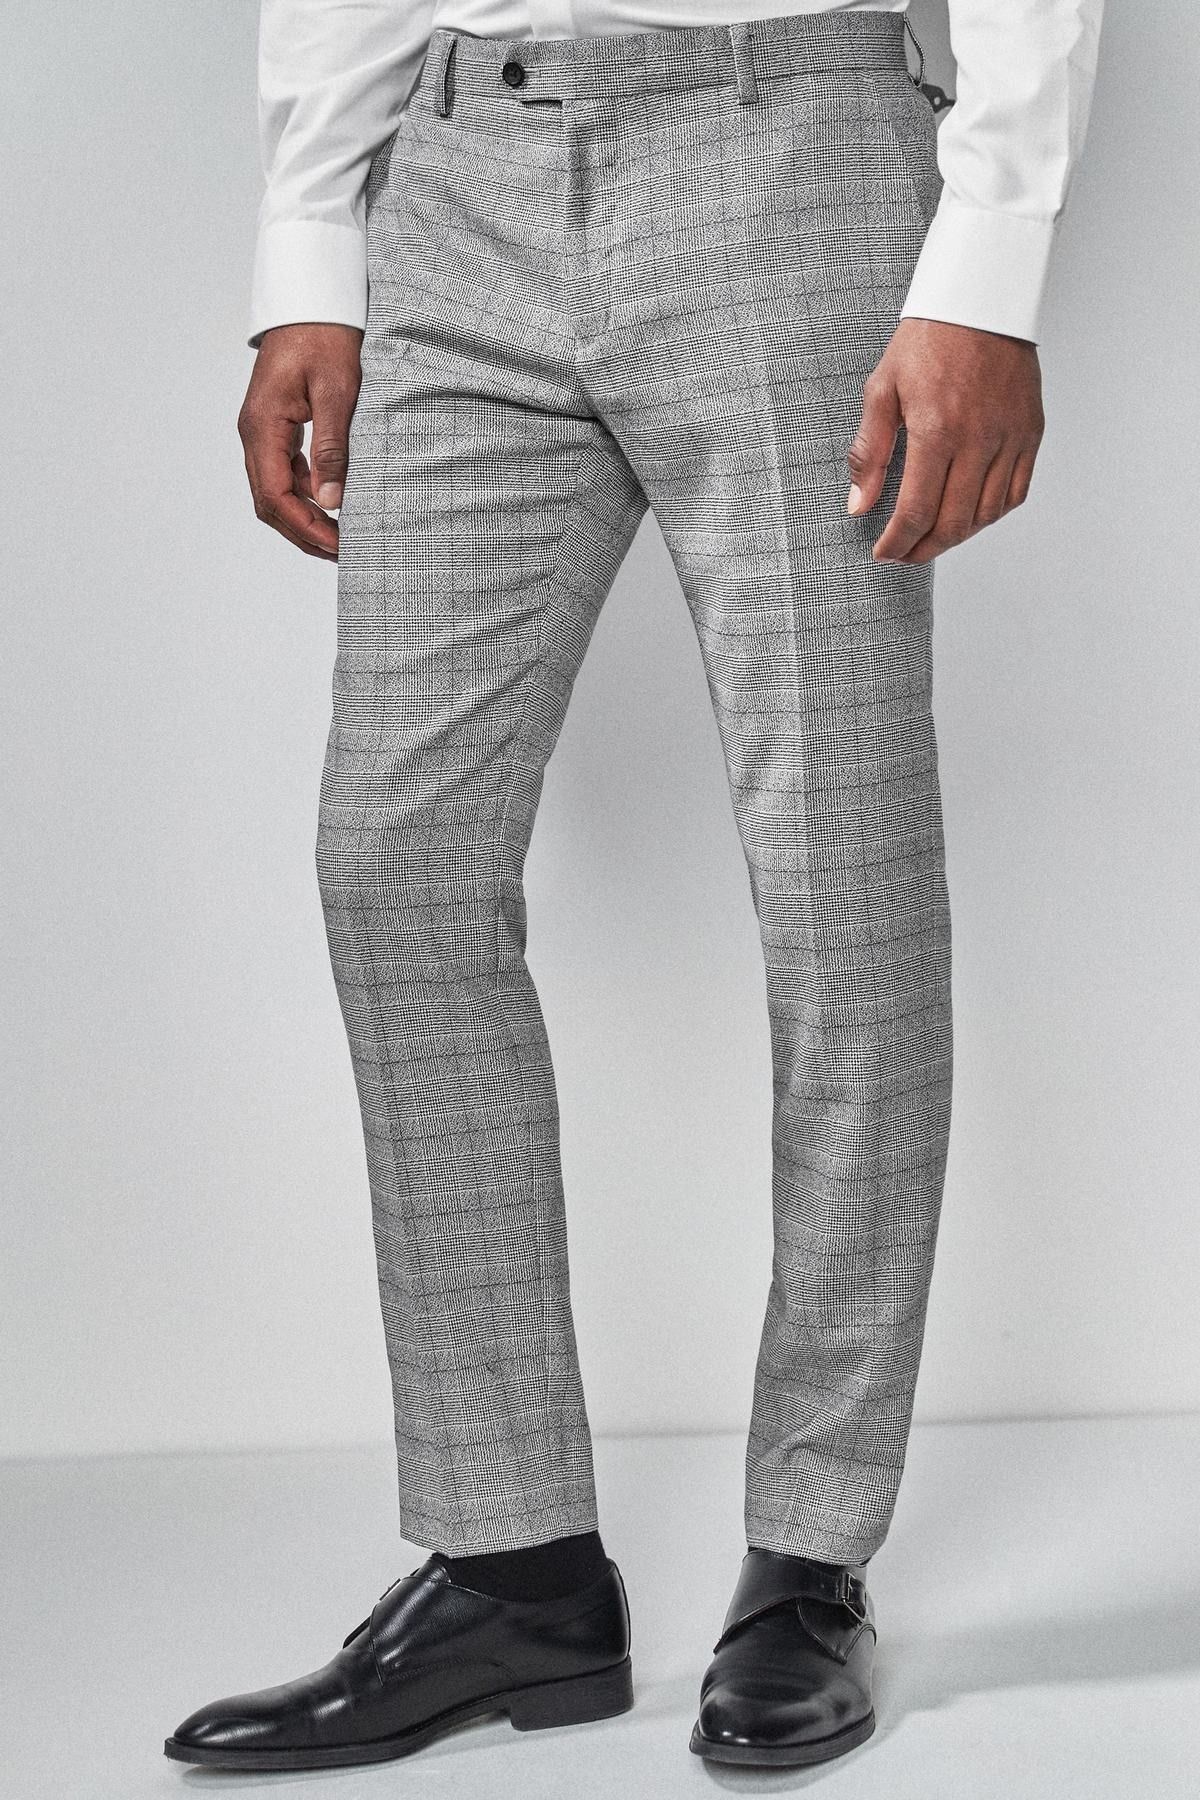 ASOS DESIGN Skinny Suit Trousers In Light Grey Texture, $37 | Asos |  Lookastic